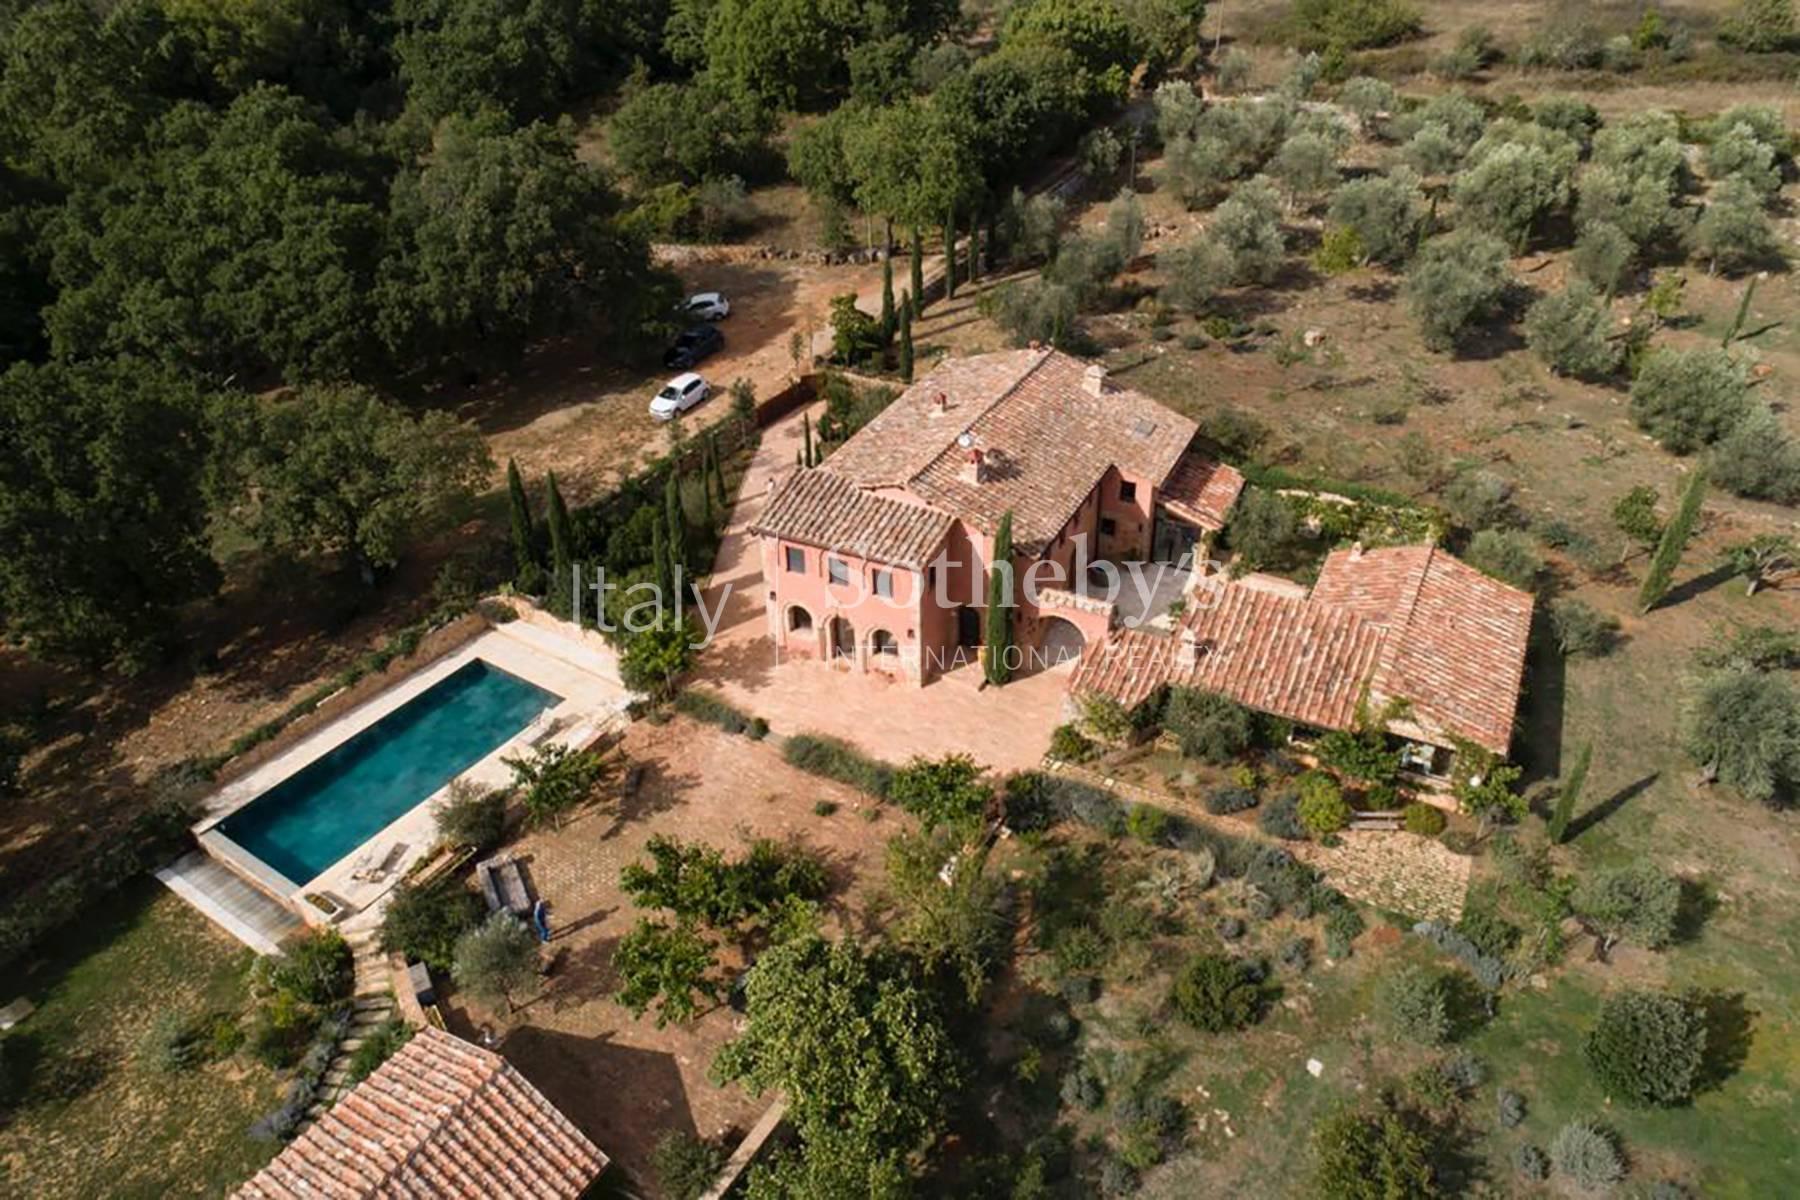 Luxurious 6 bedroom villa with pool near Siena - 35